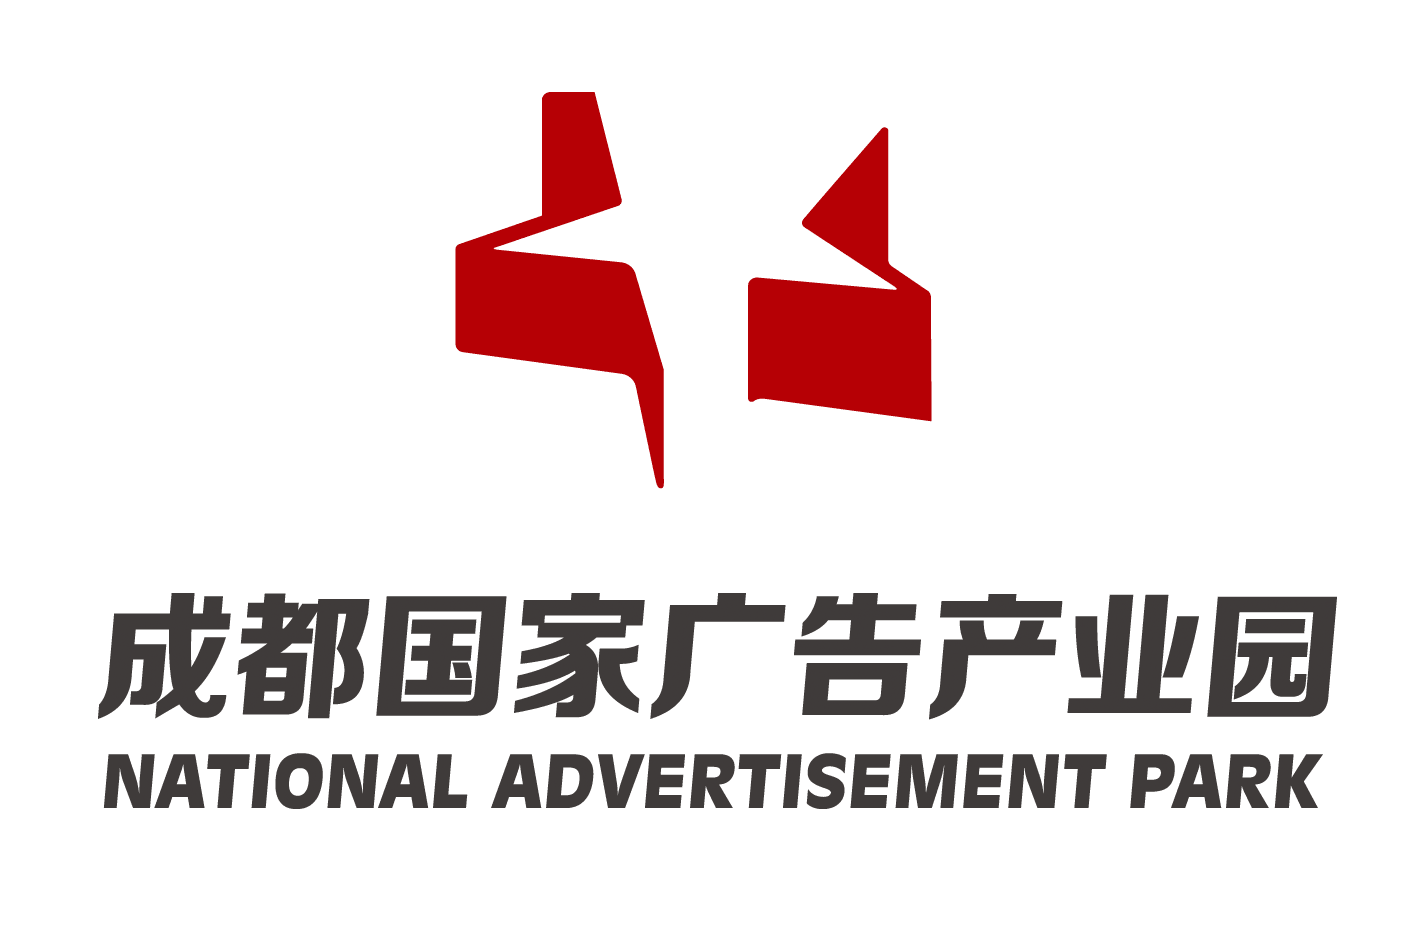 National Advertisement Park logo